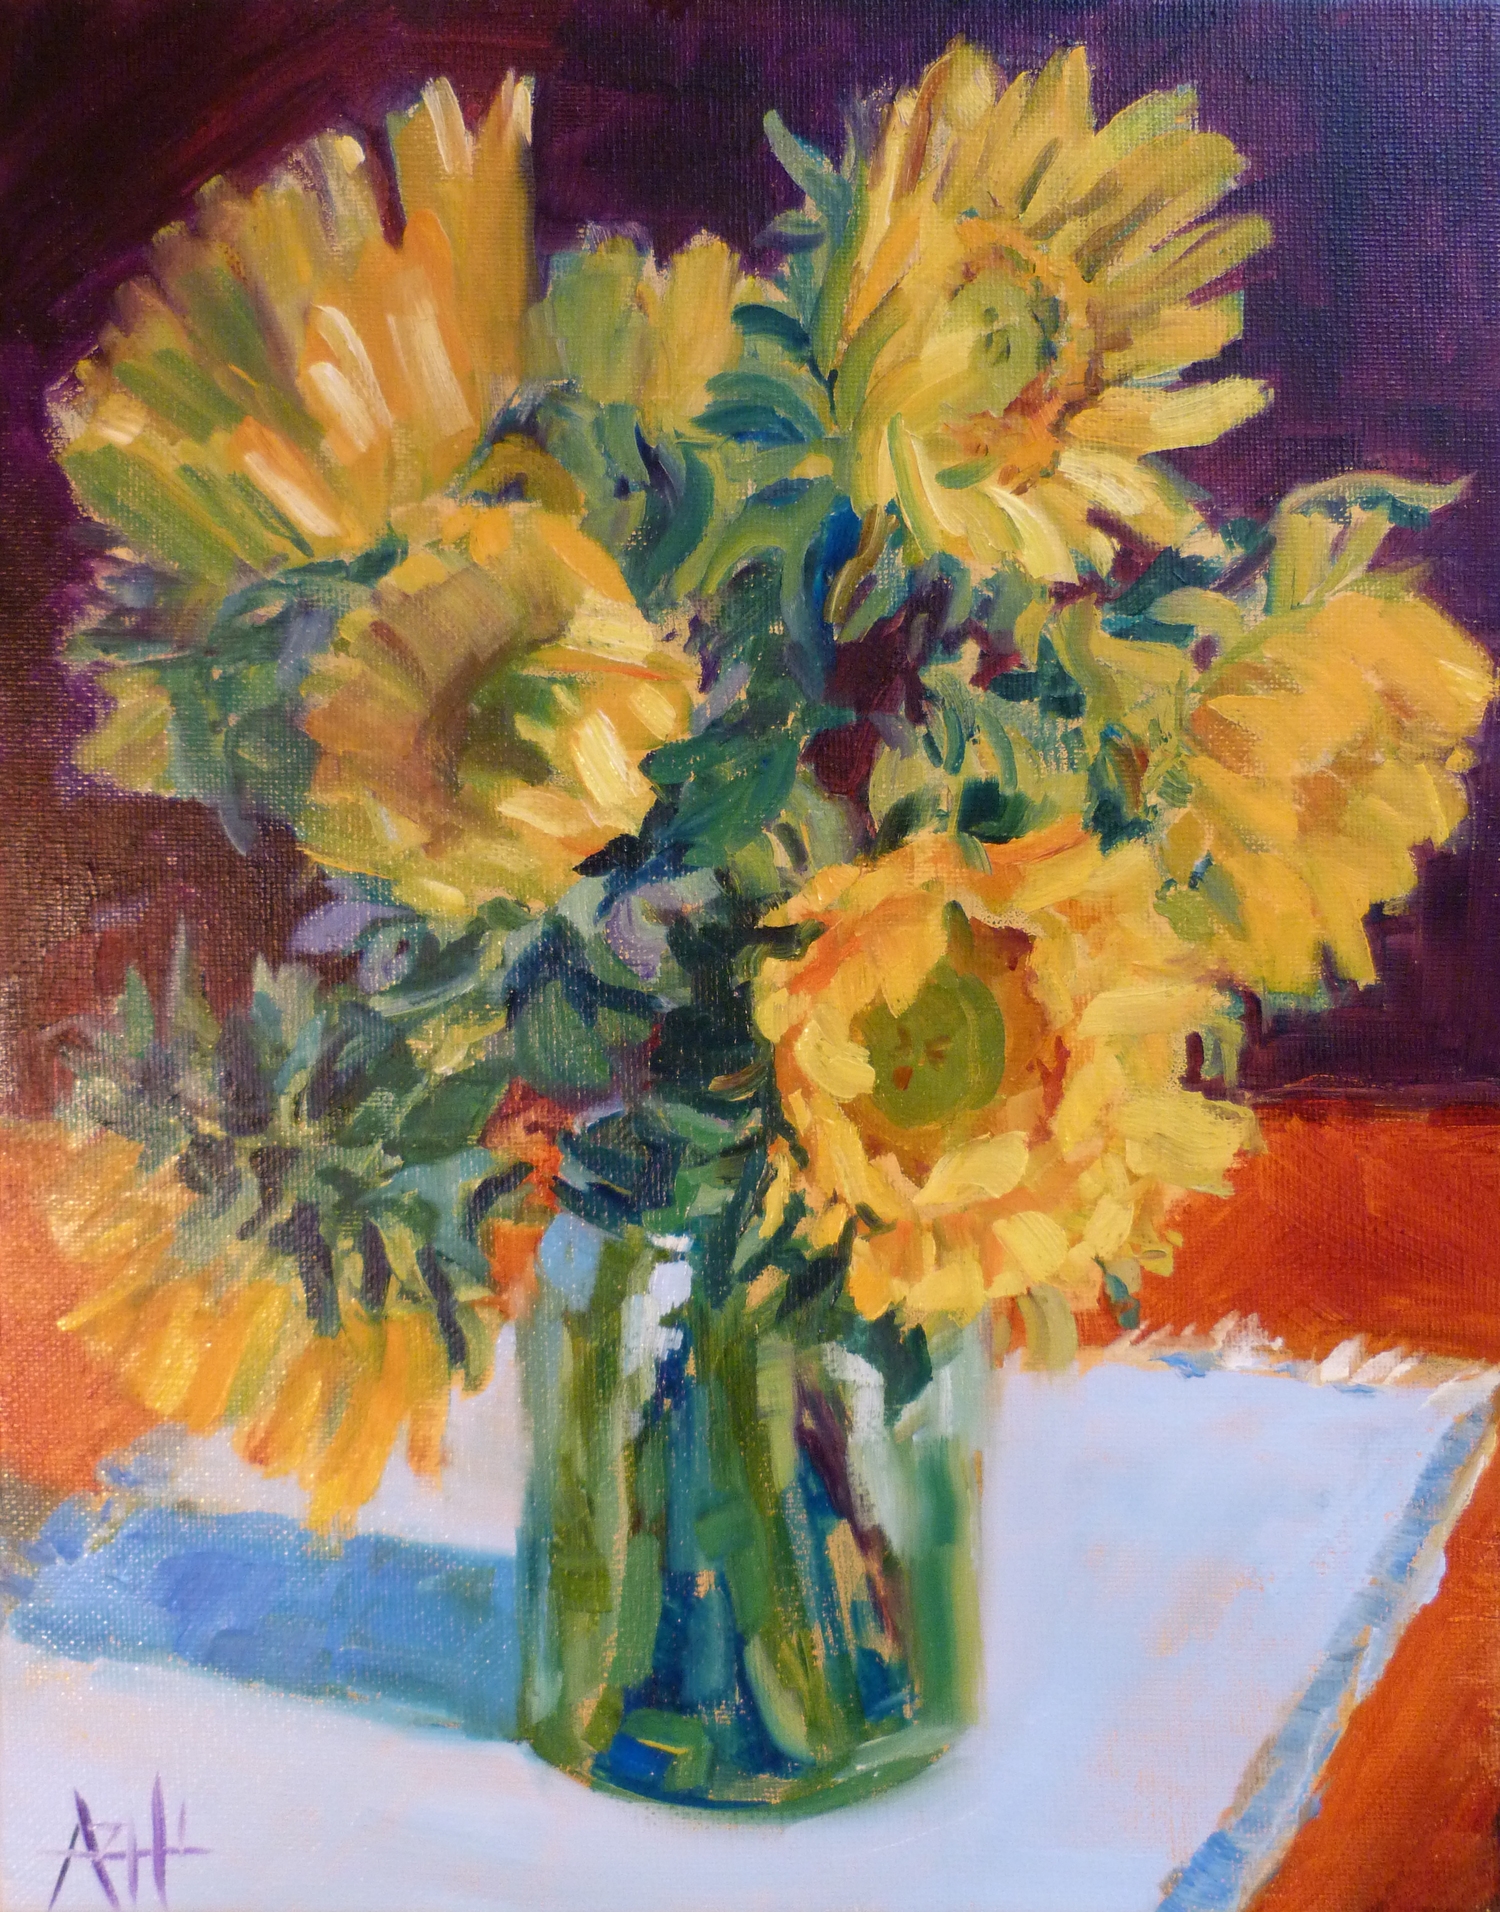 SOLD, Sunflowers in a Jar, Copyright 2014 Hirschten, Oil on Canvas, 11" x 14"